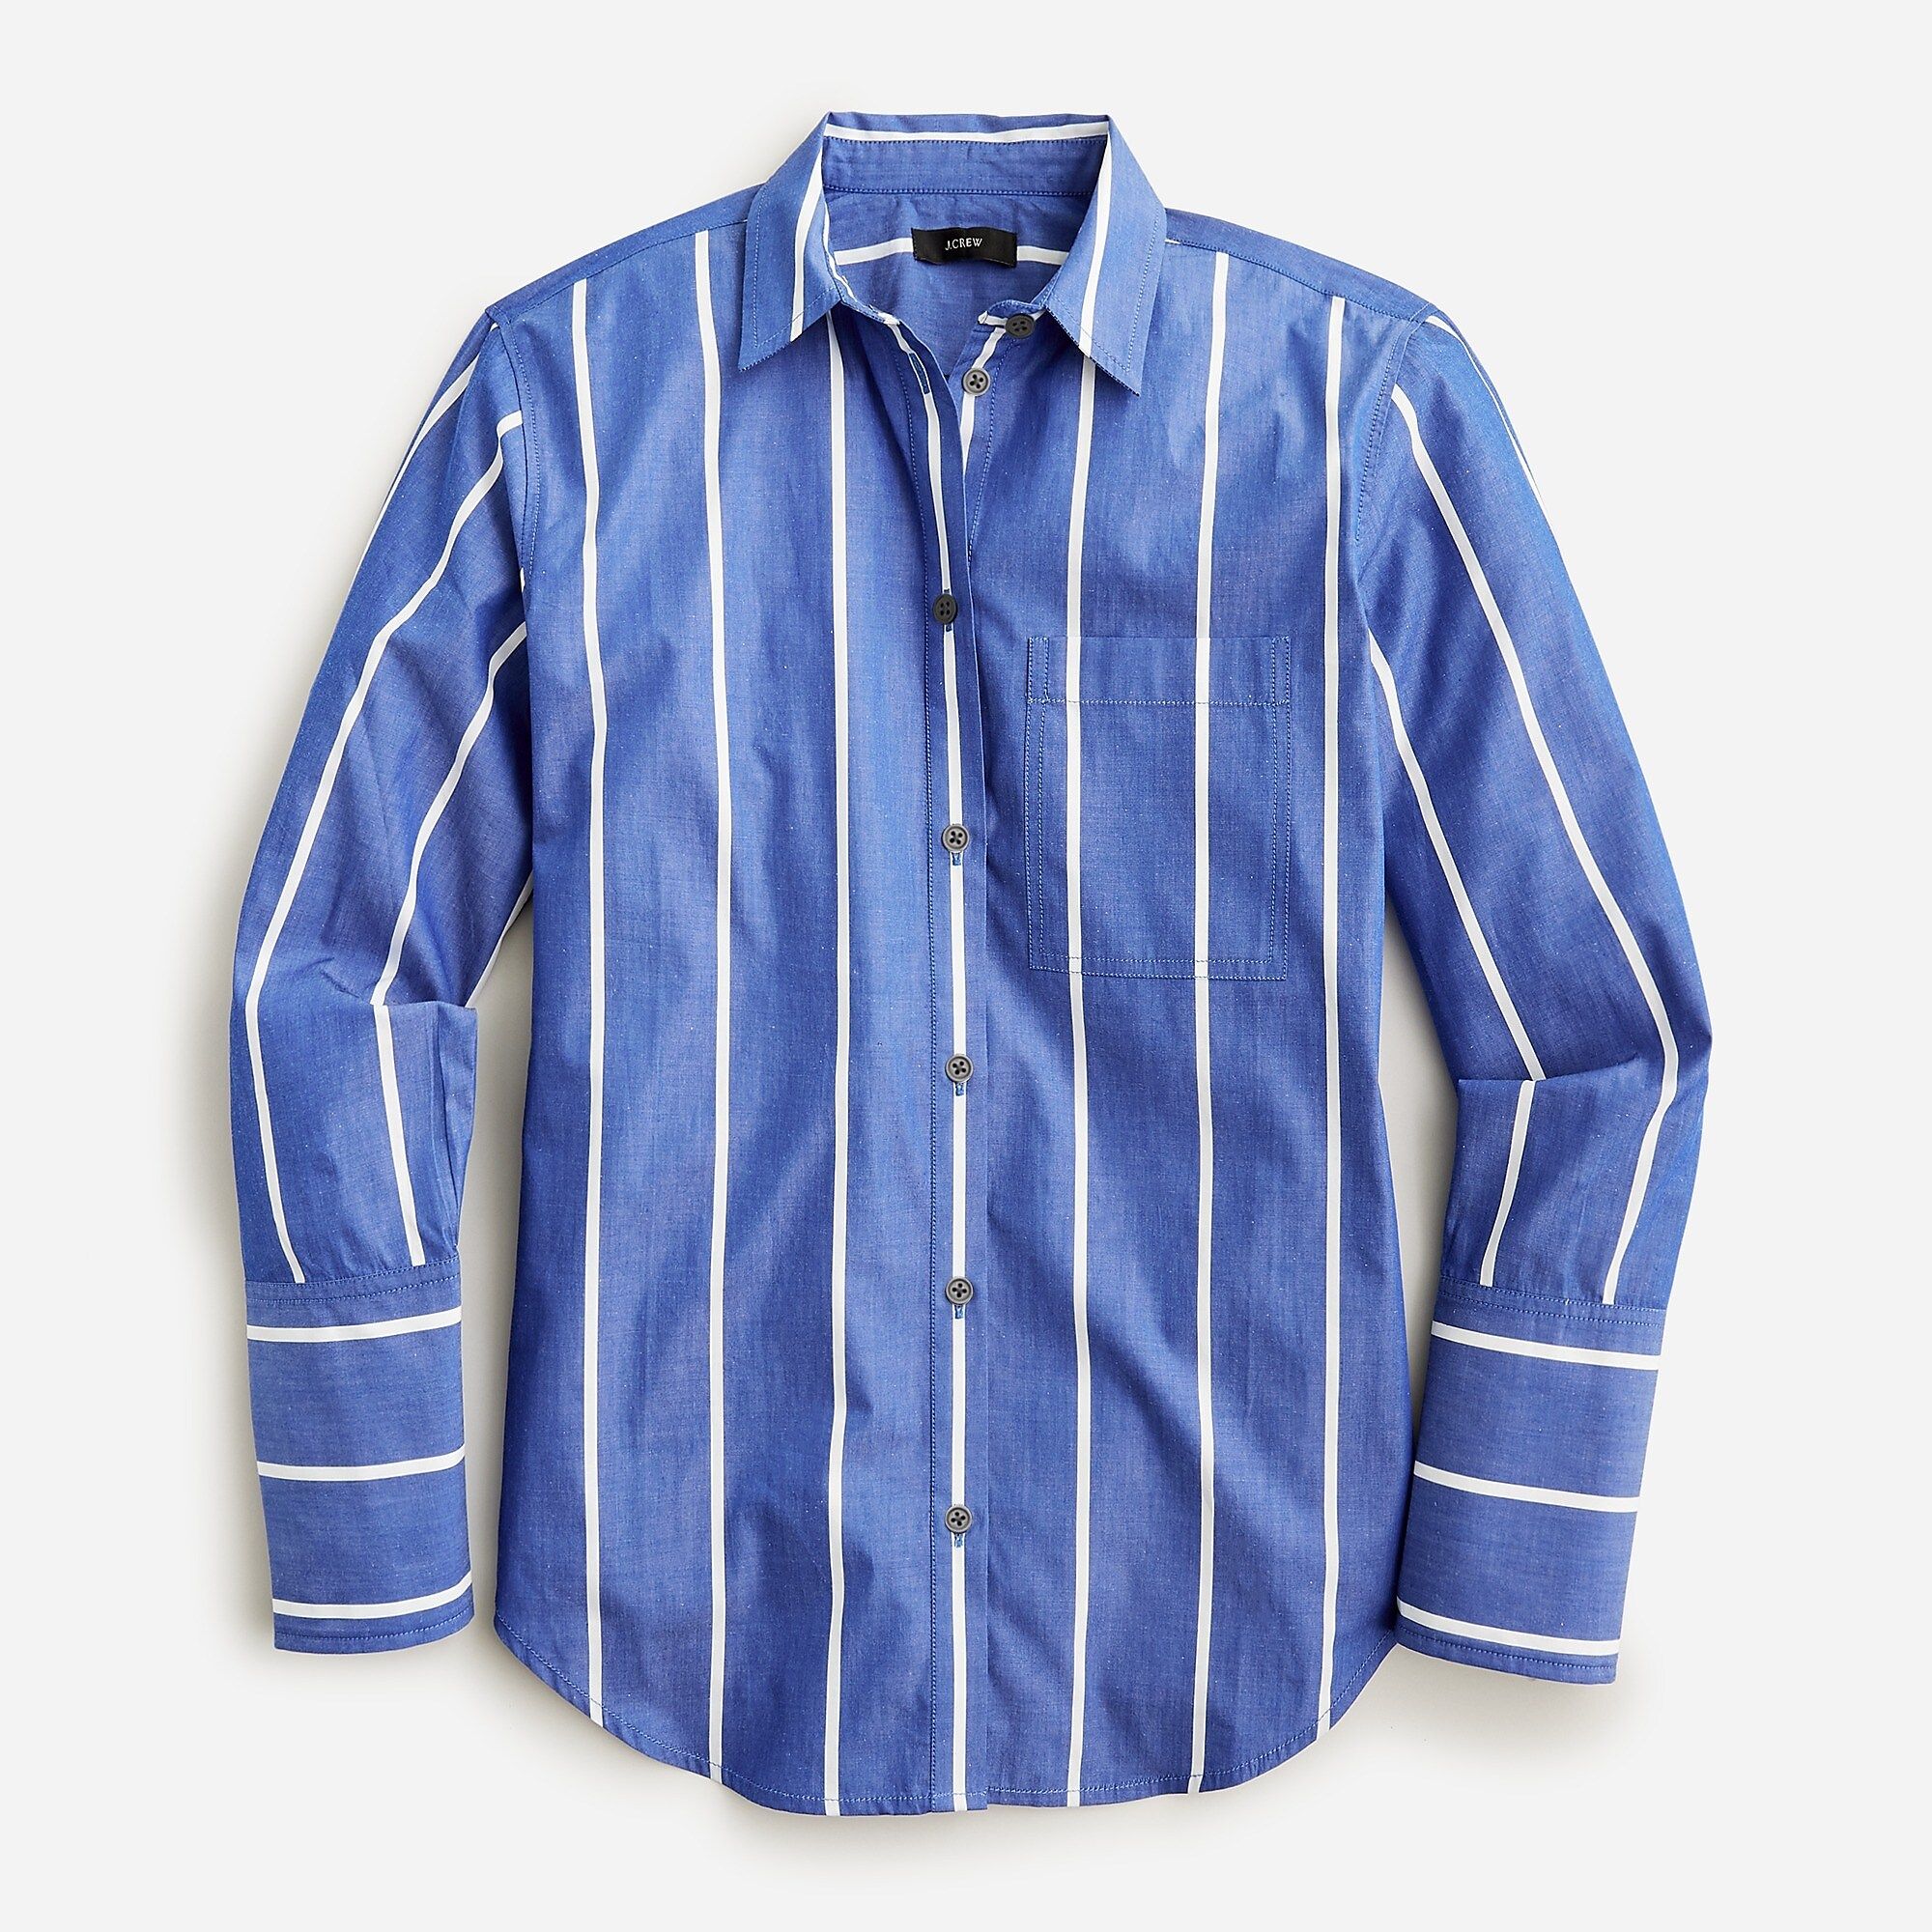 Garçon shirt in cotton poplin stripe | J.Crew US